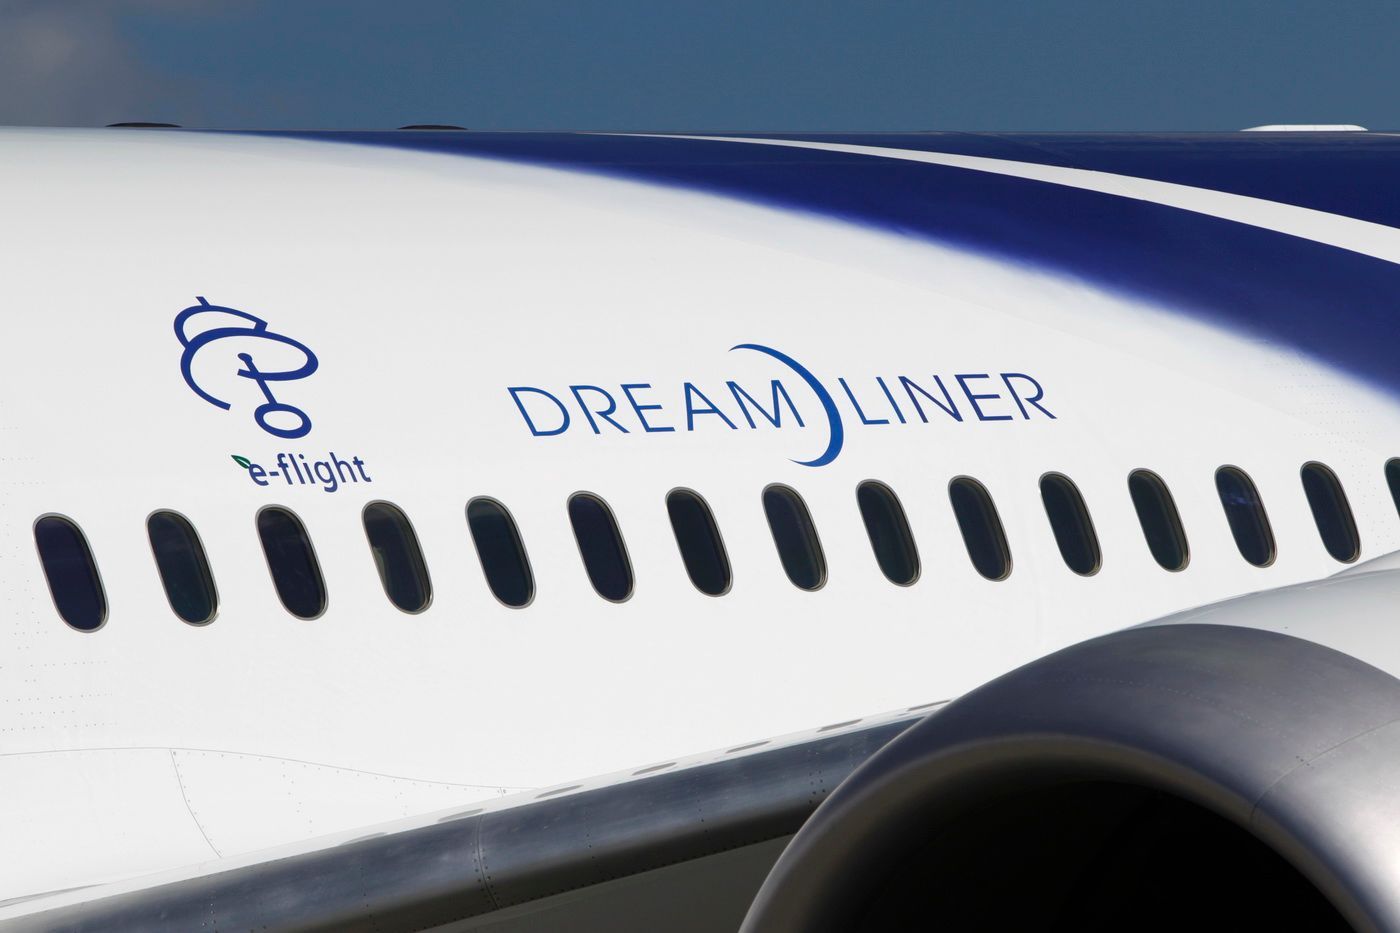 První let Boeingu 787 Dreamliner s pasažéry